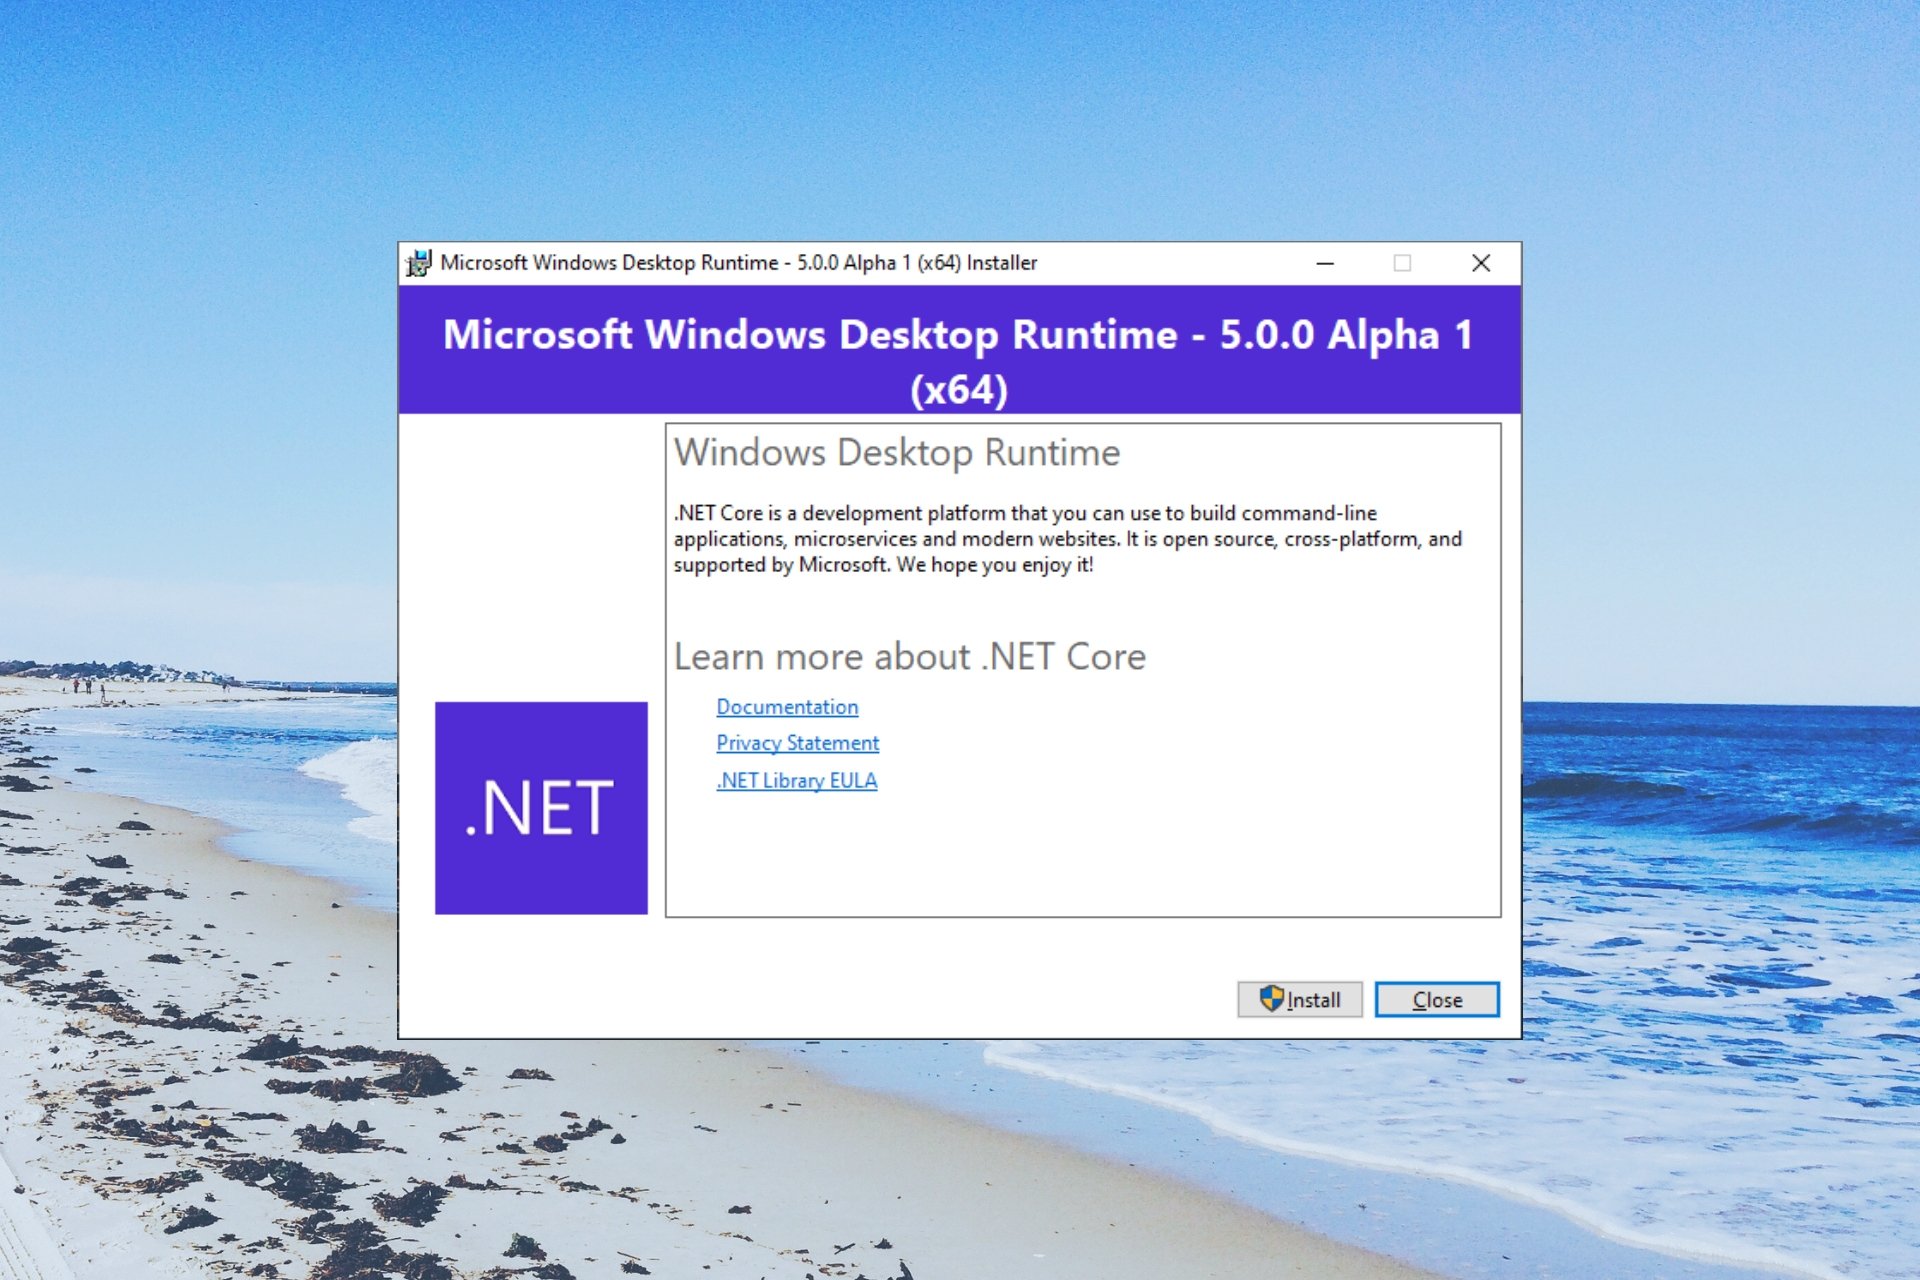 What is Microsoft Windows Desktop Runtime?